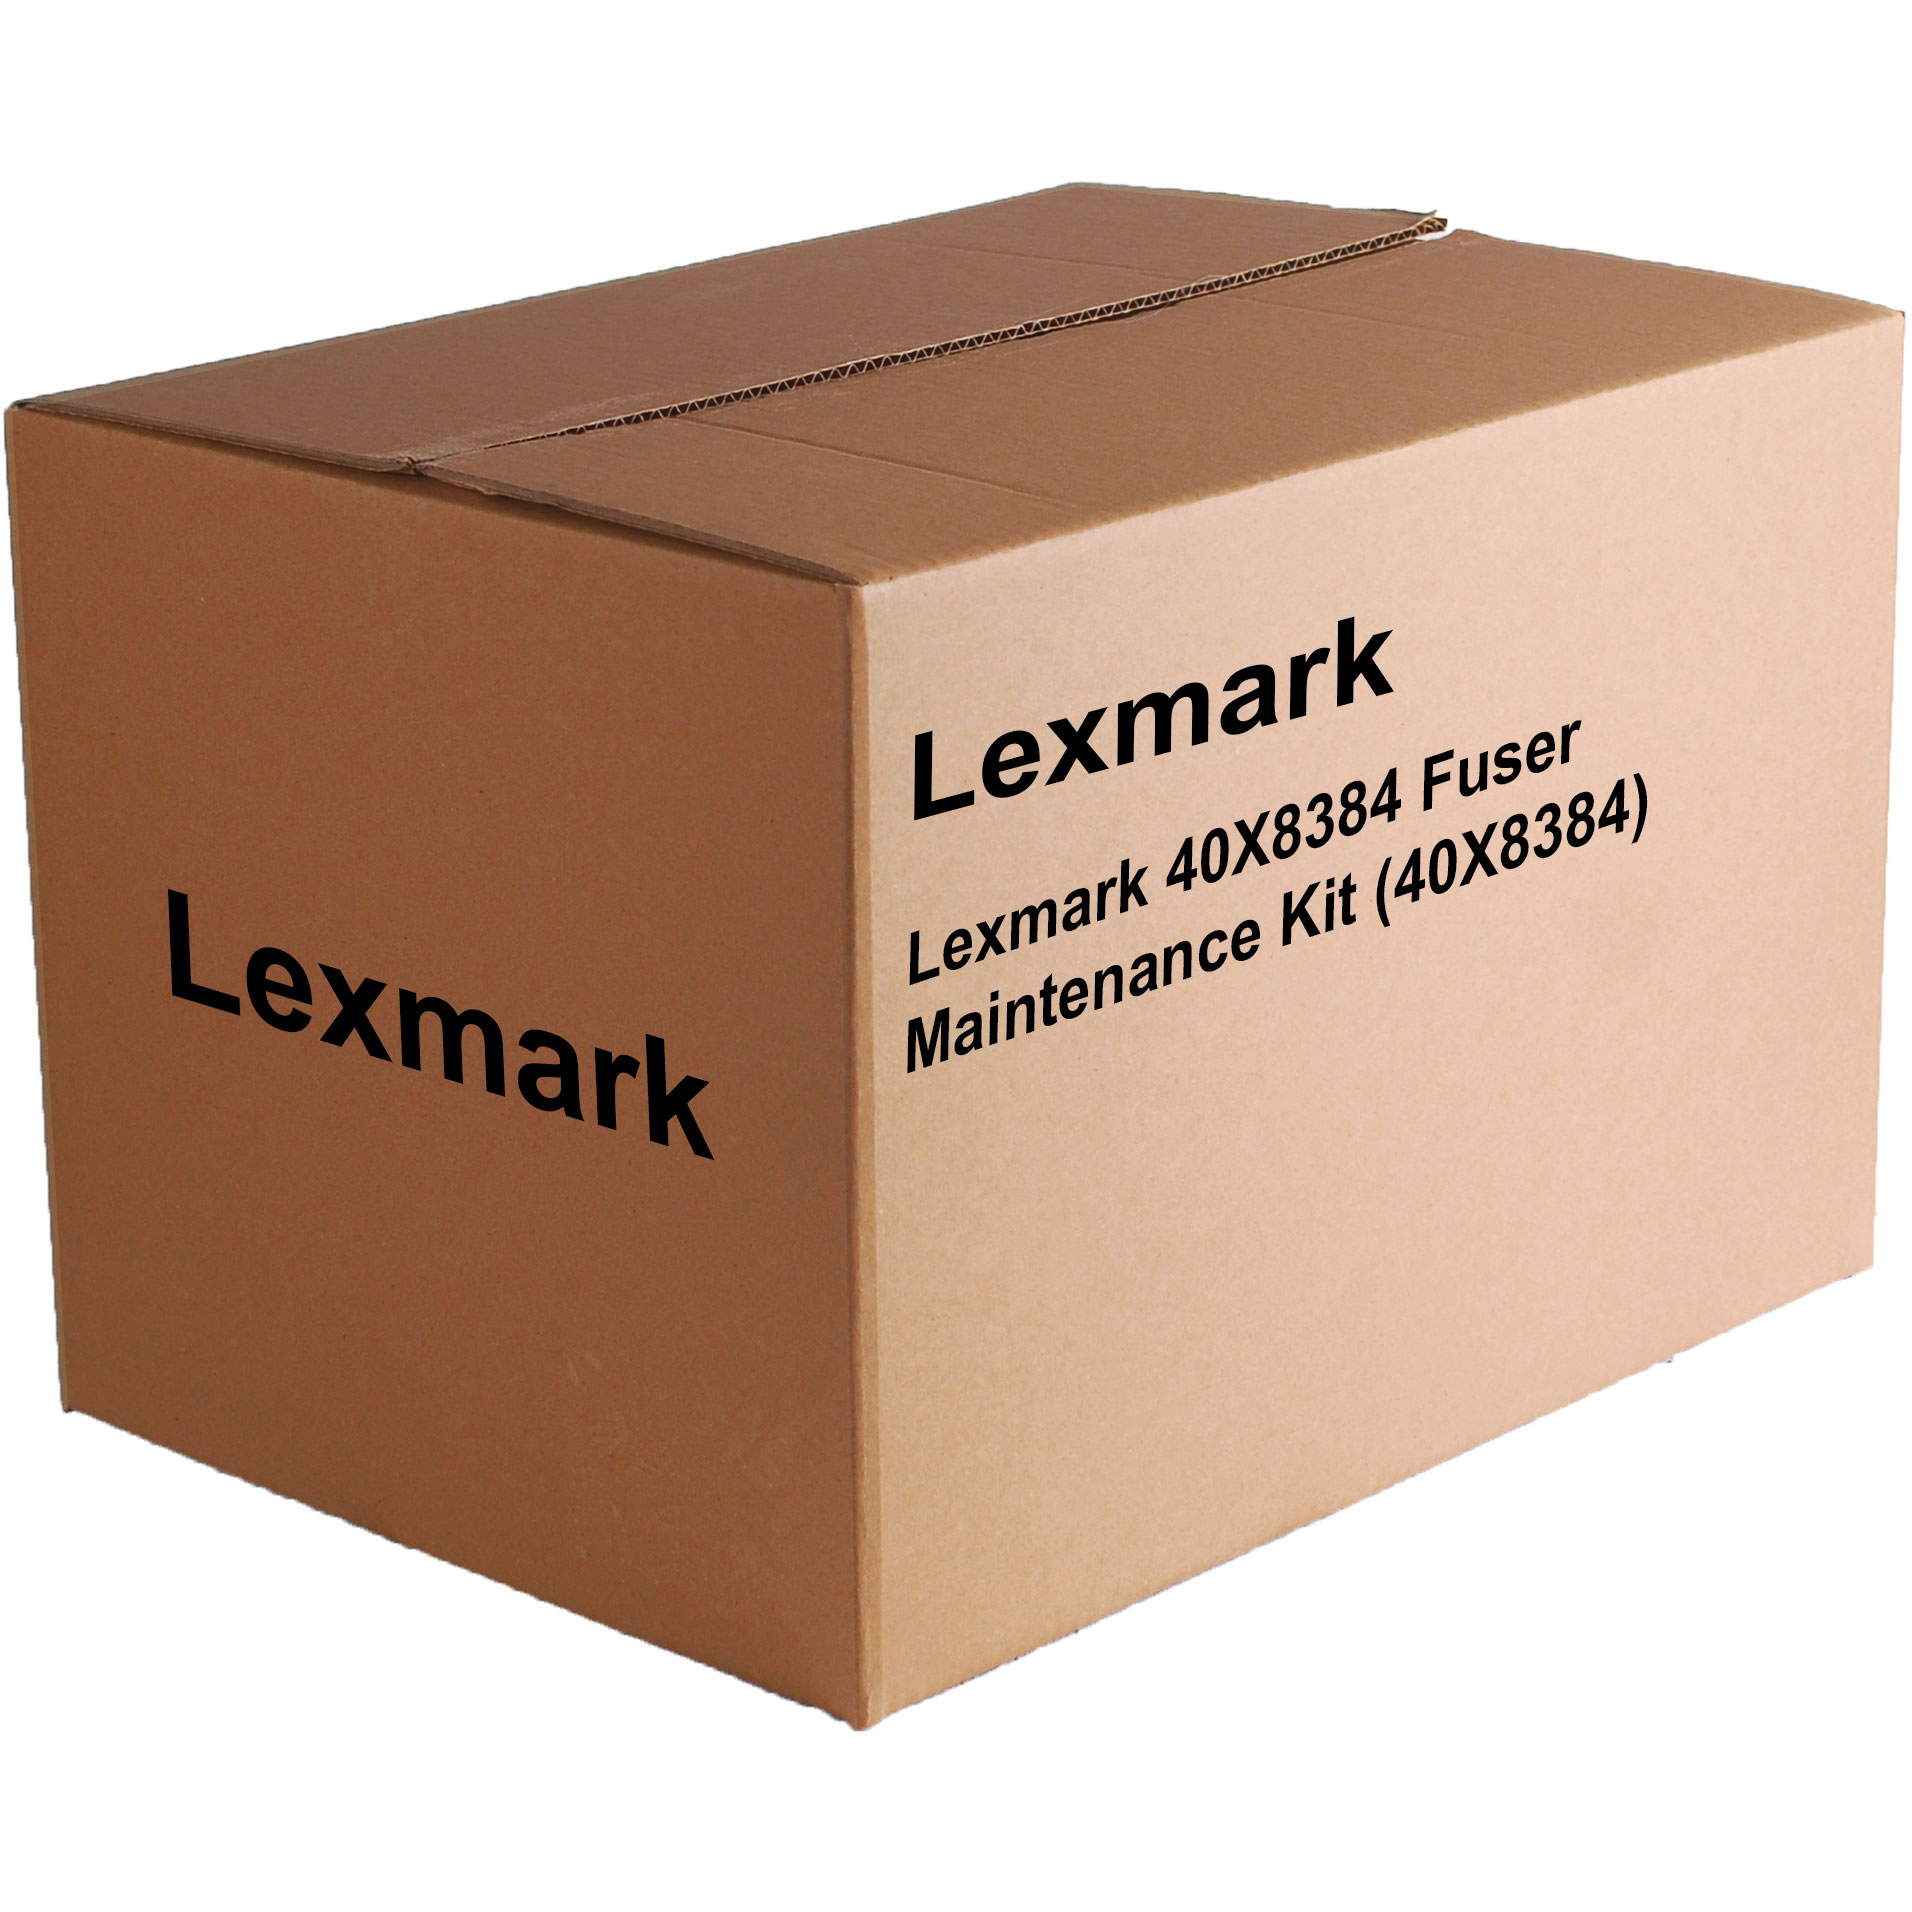 Original Lexmark 40X8384 Fuser Maintenance Kit (40X8384)